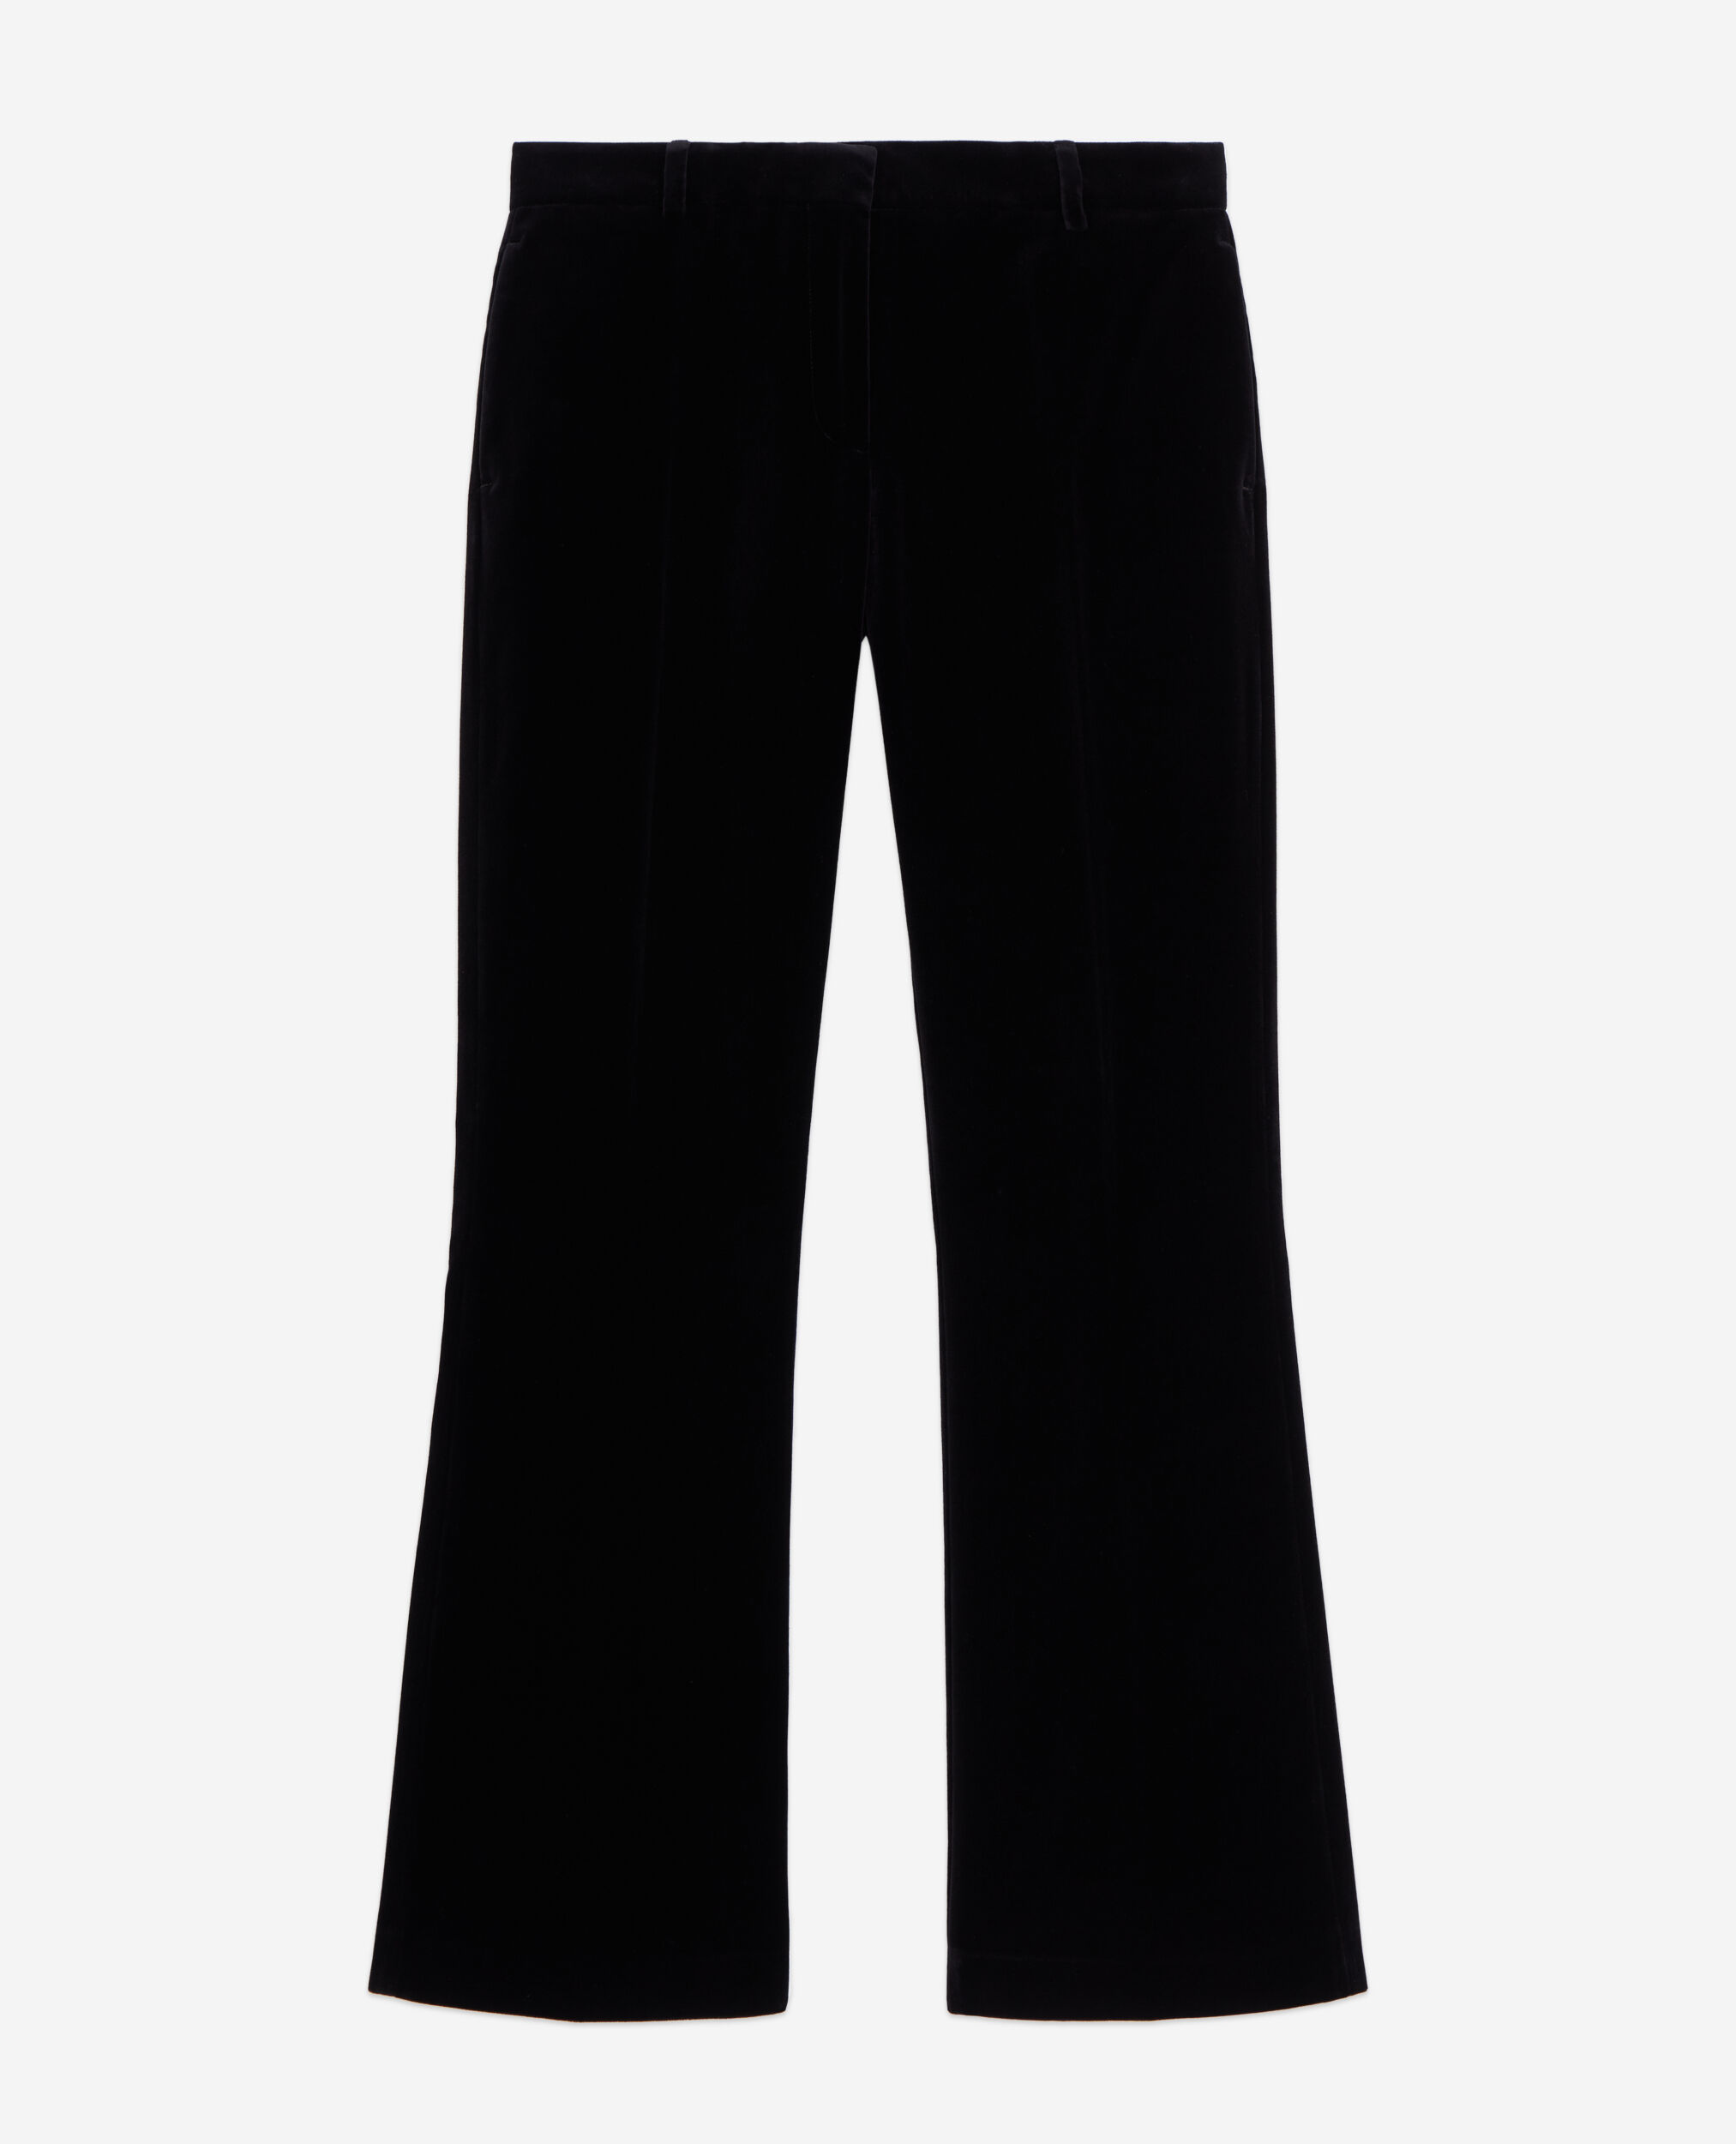 Pantalón traje negro terciopelo, BLACK, hi-res image number null